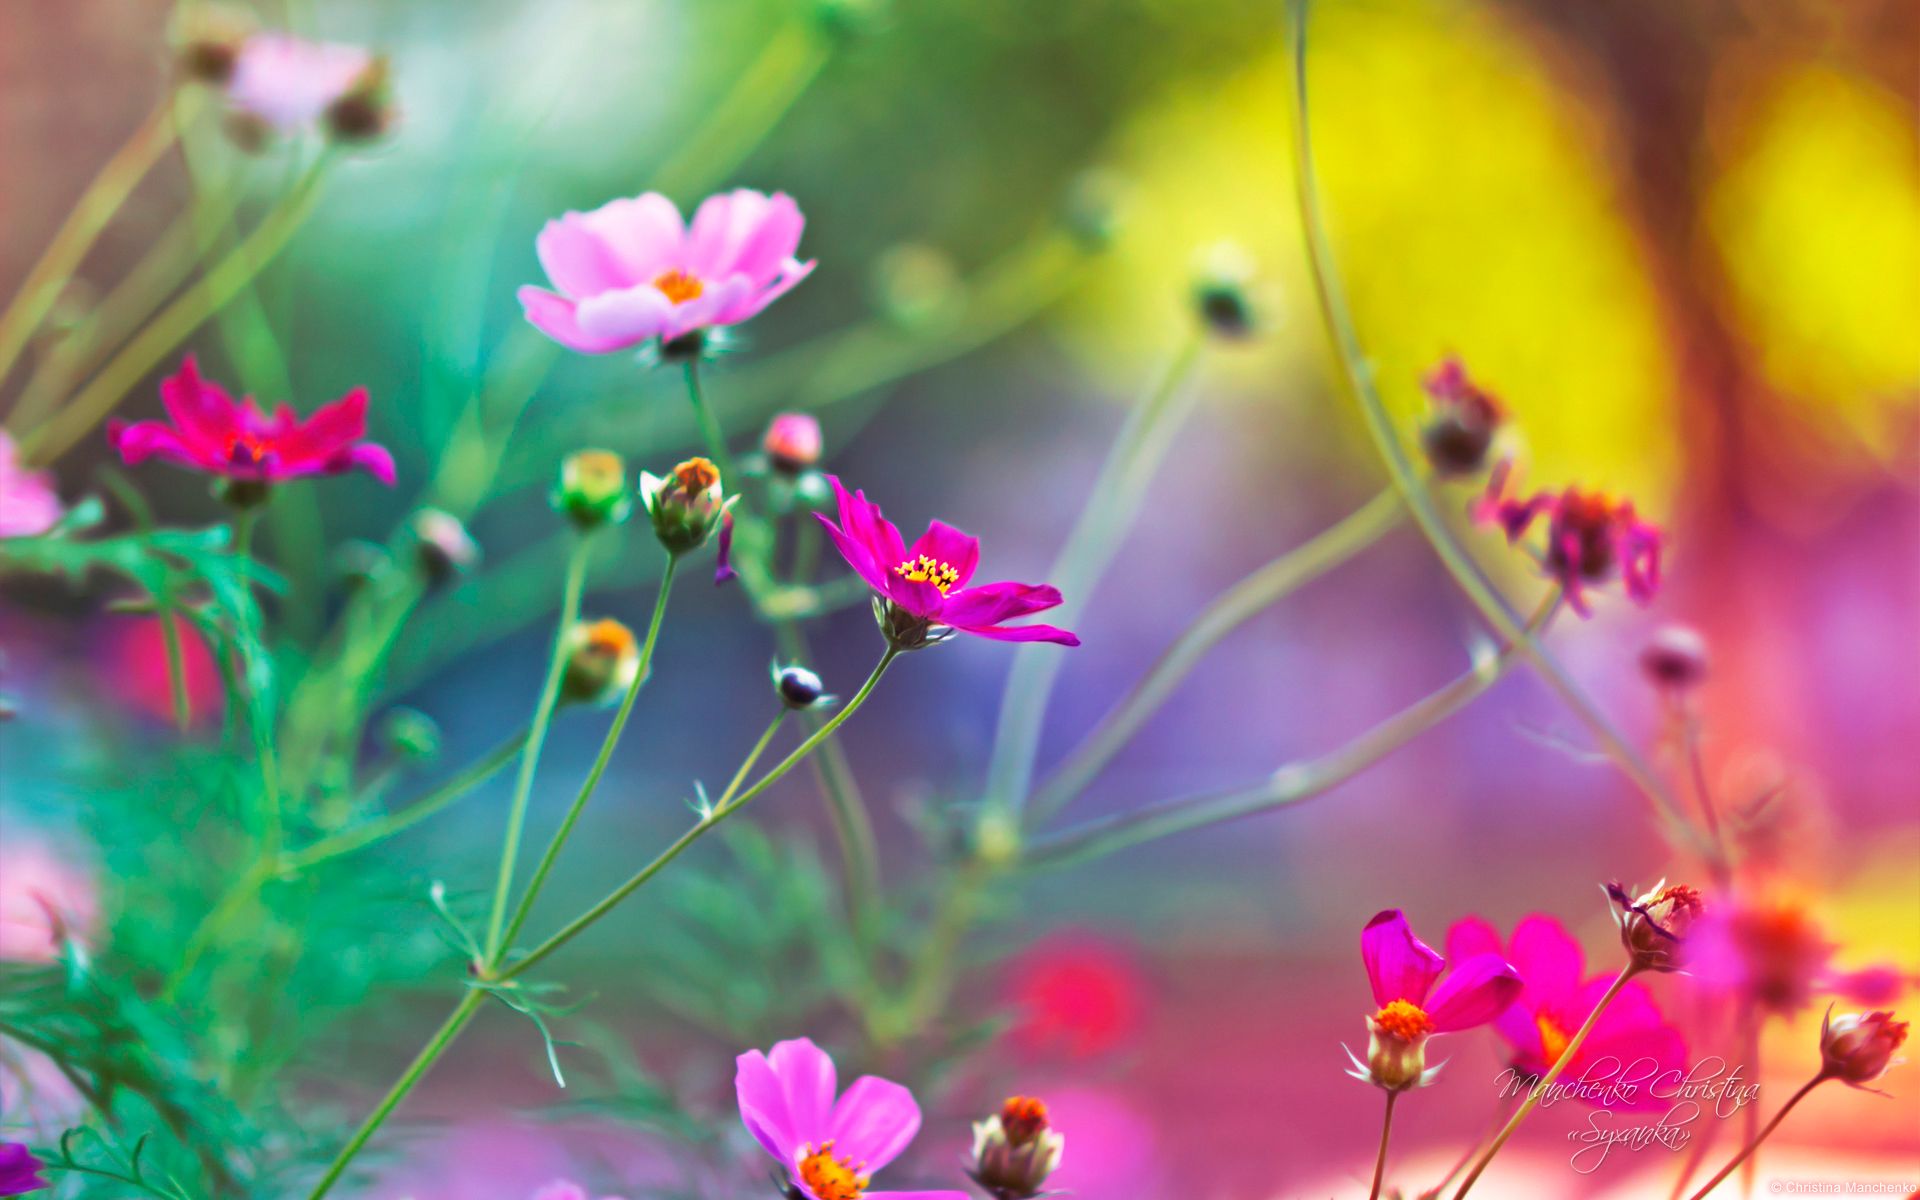 An excellent flower wallpaper for Windows 8 HD Backgrounds